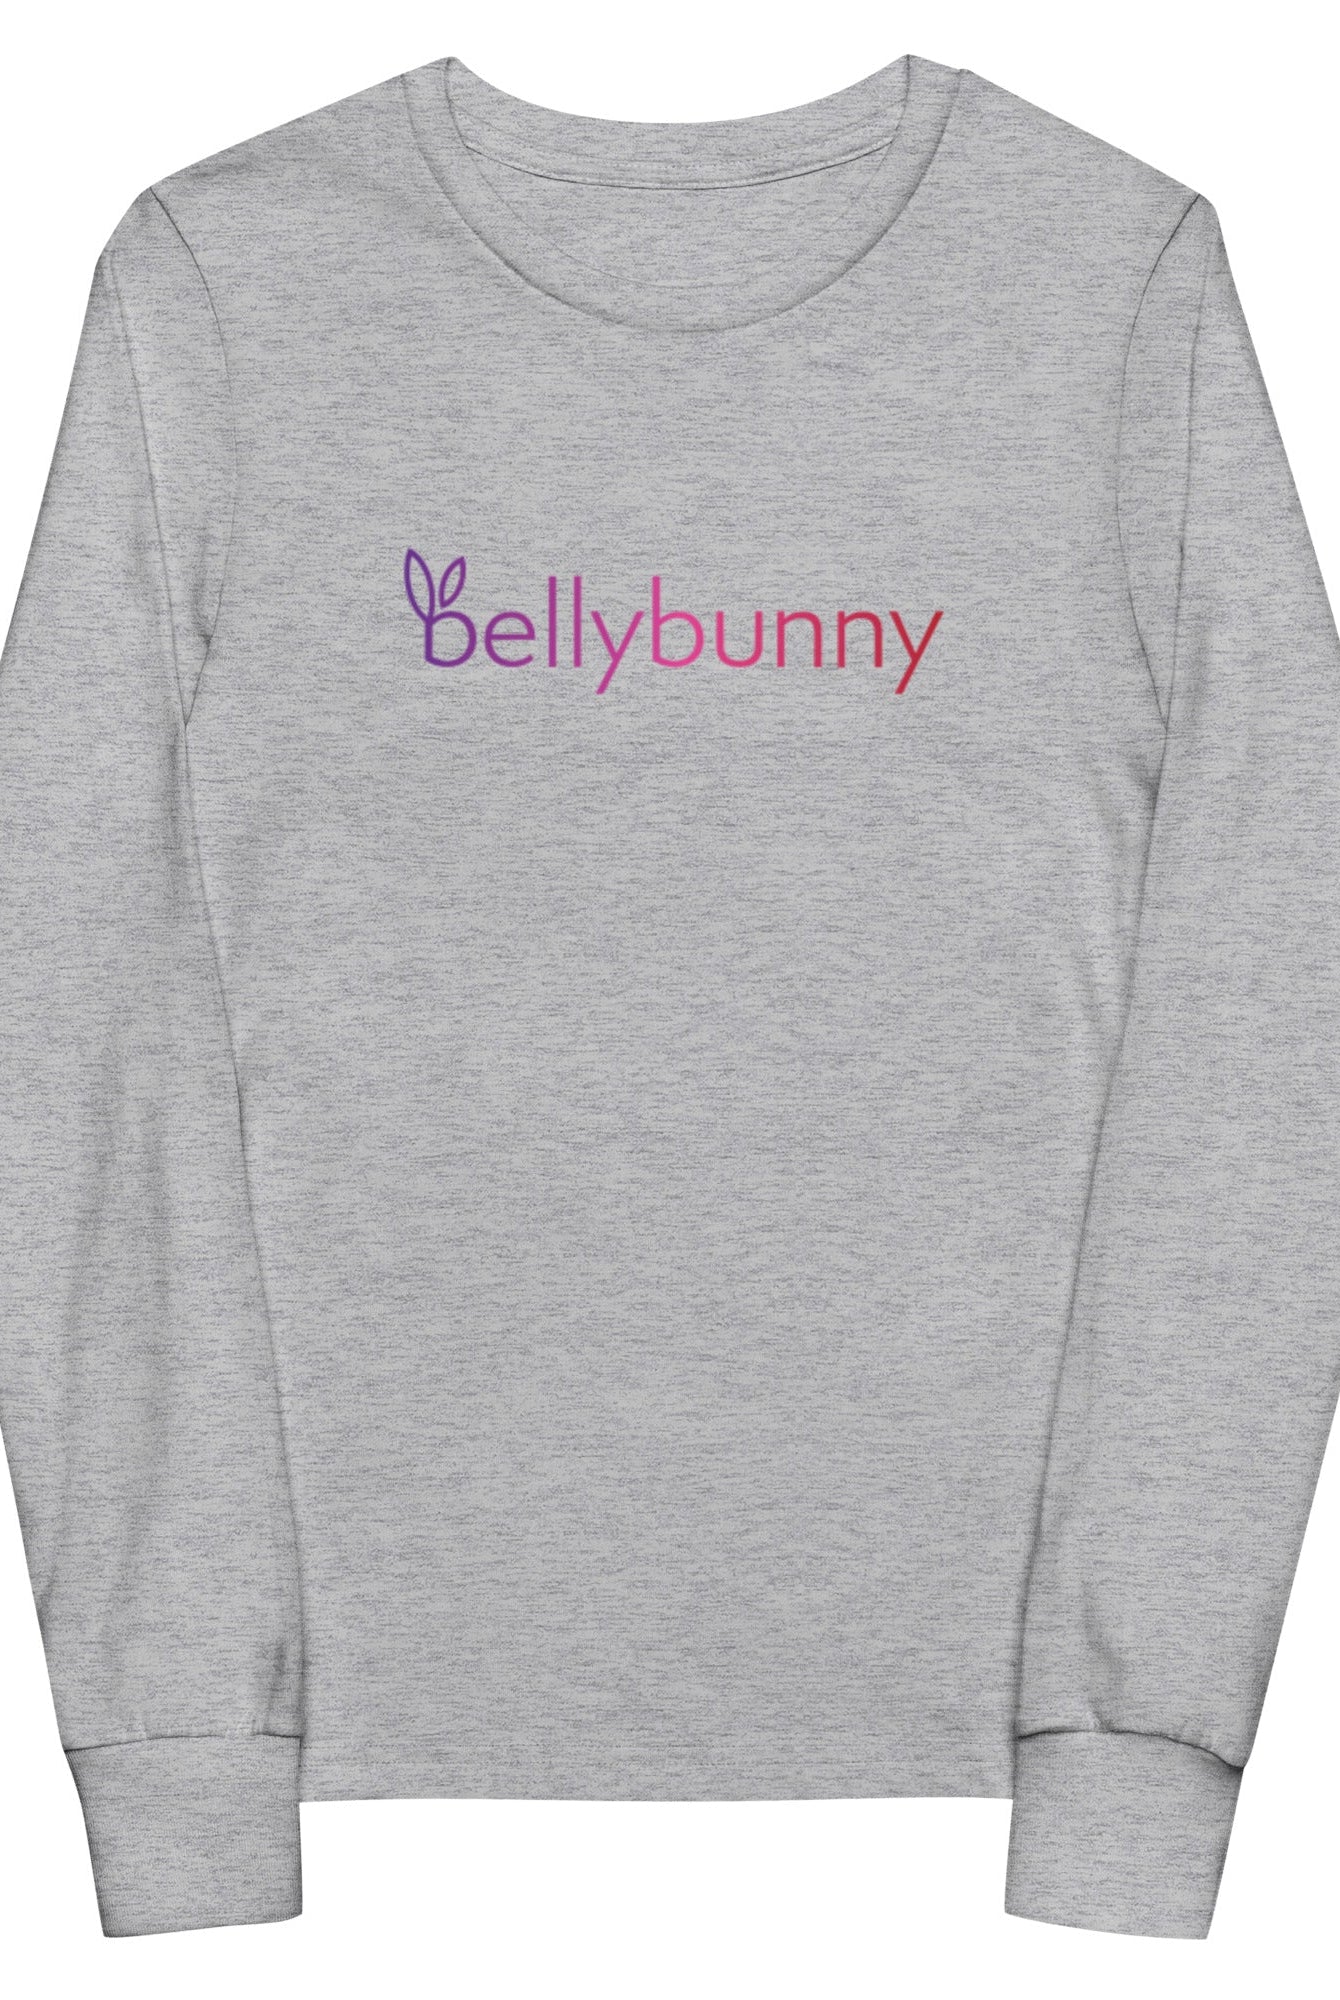 Bellybunny-Youth Long Sleeve T-Shirt-Athletic Heather-with rainbow logo